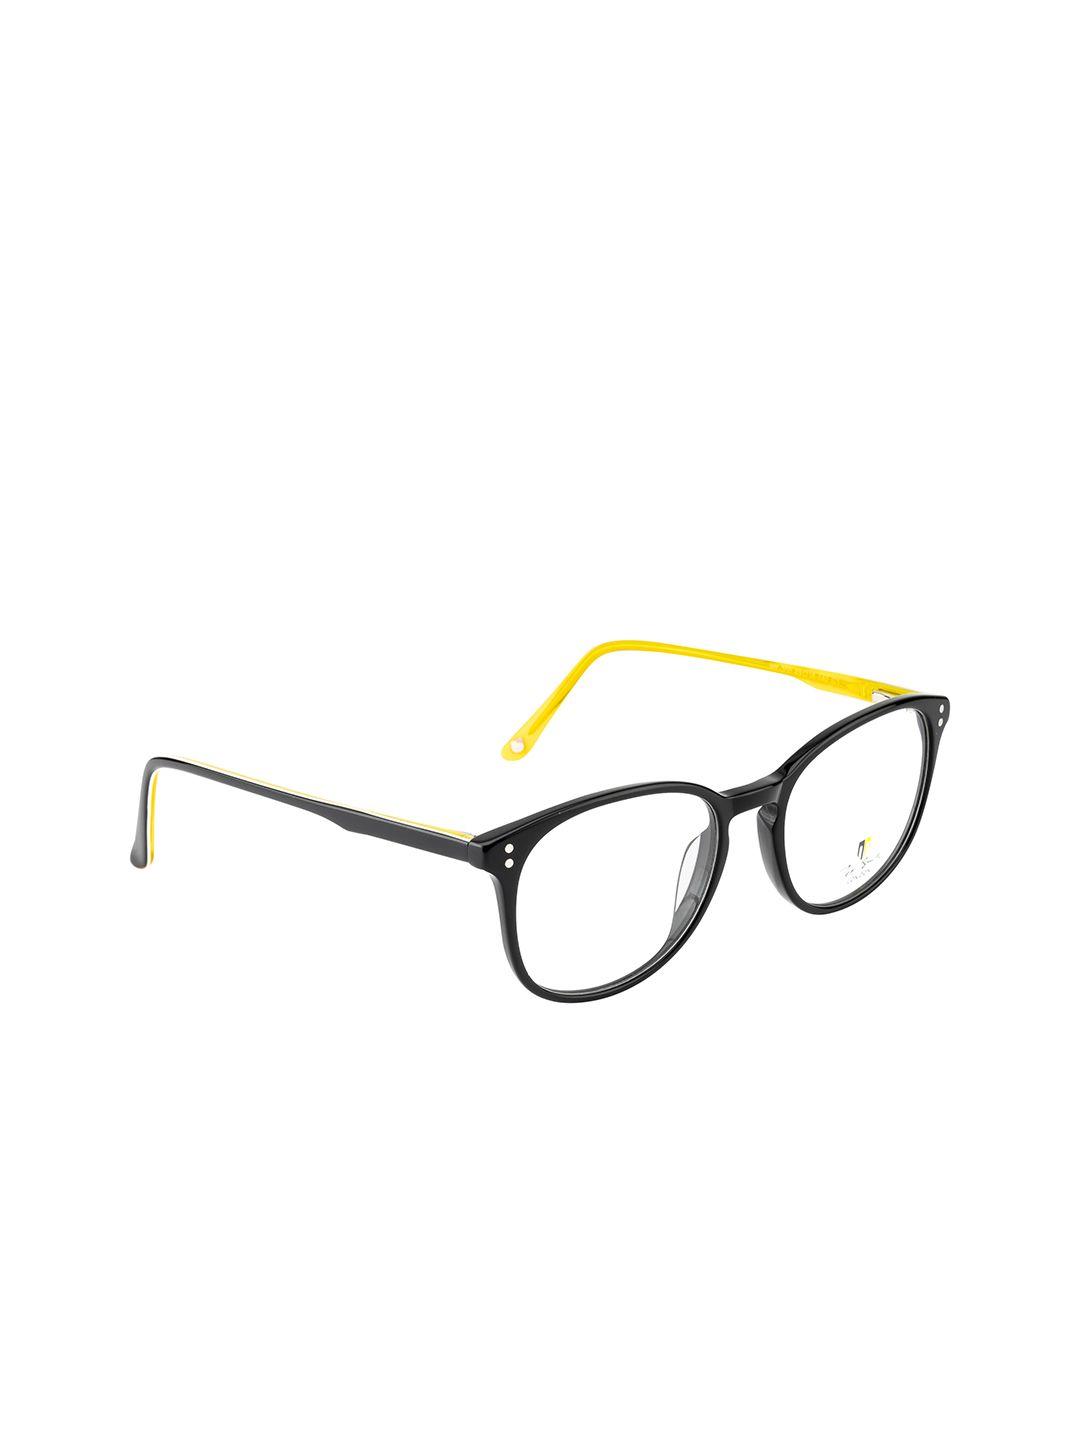 ted smith unisex black & yellow solid full rim round frames eyeglasses